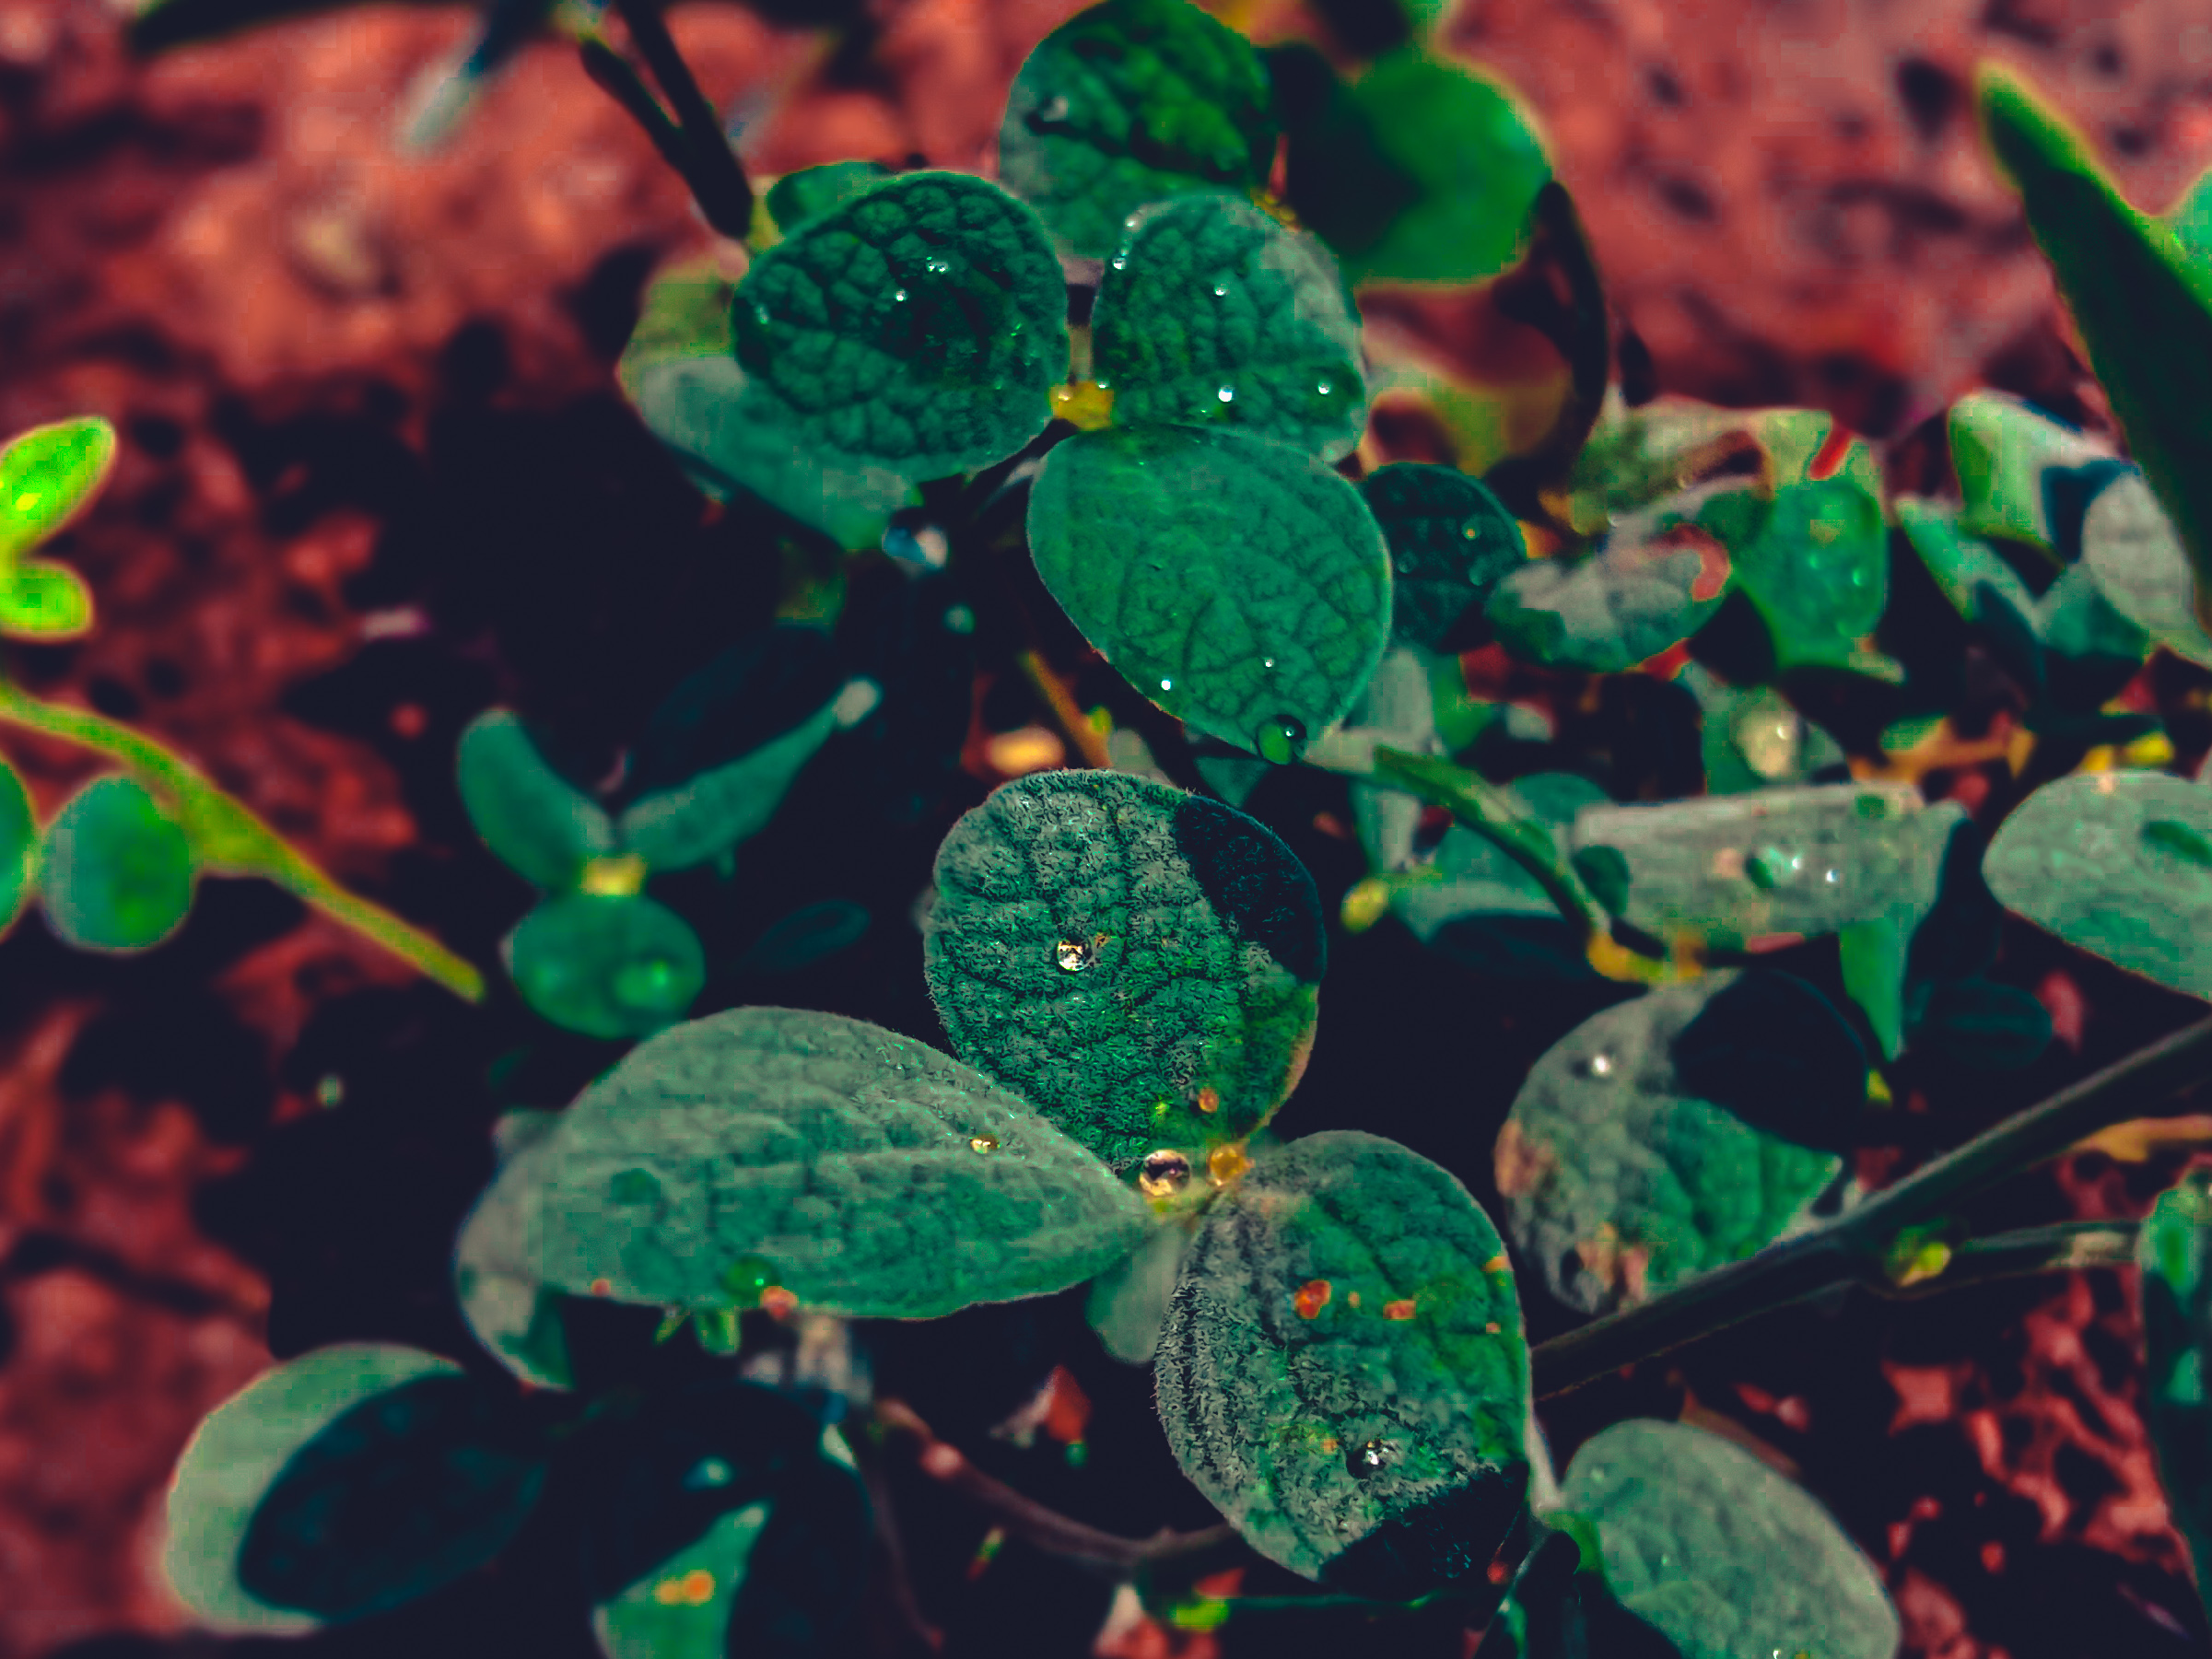 Water drop on plant leaf